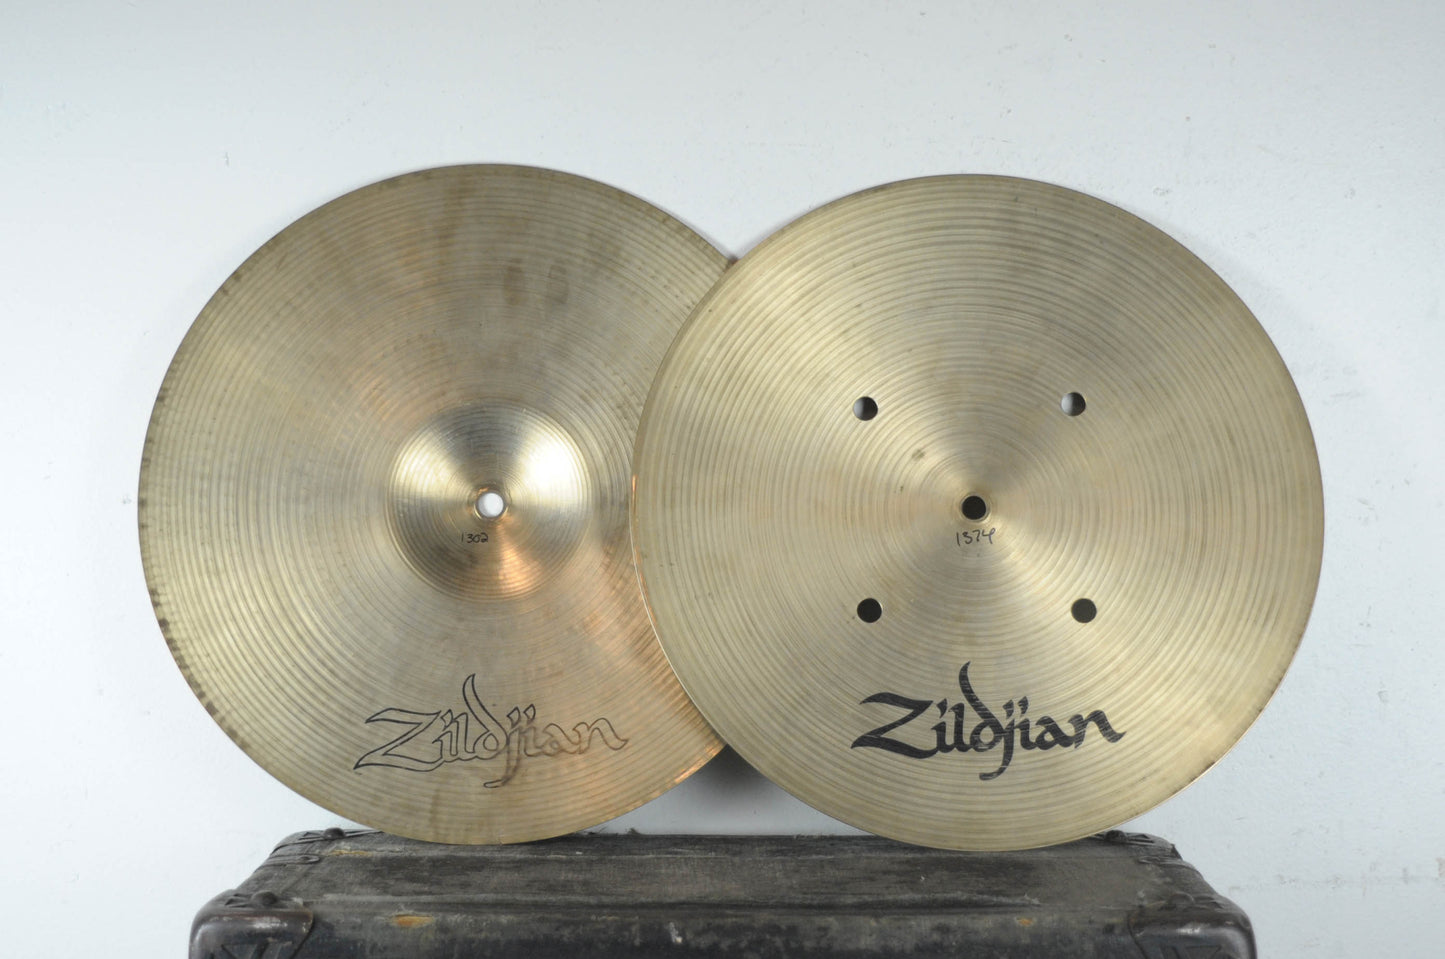 Vintage Zildjian 14" Quick Beat Hi Hat Cymbals 1302 1374g